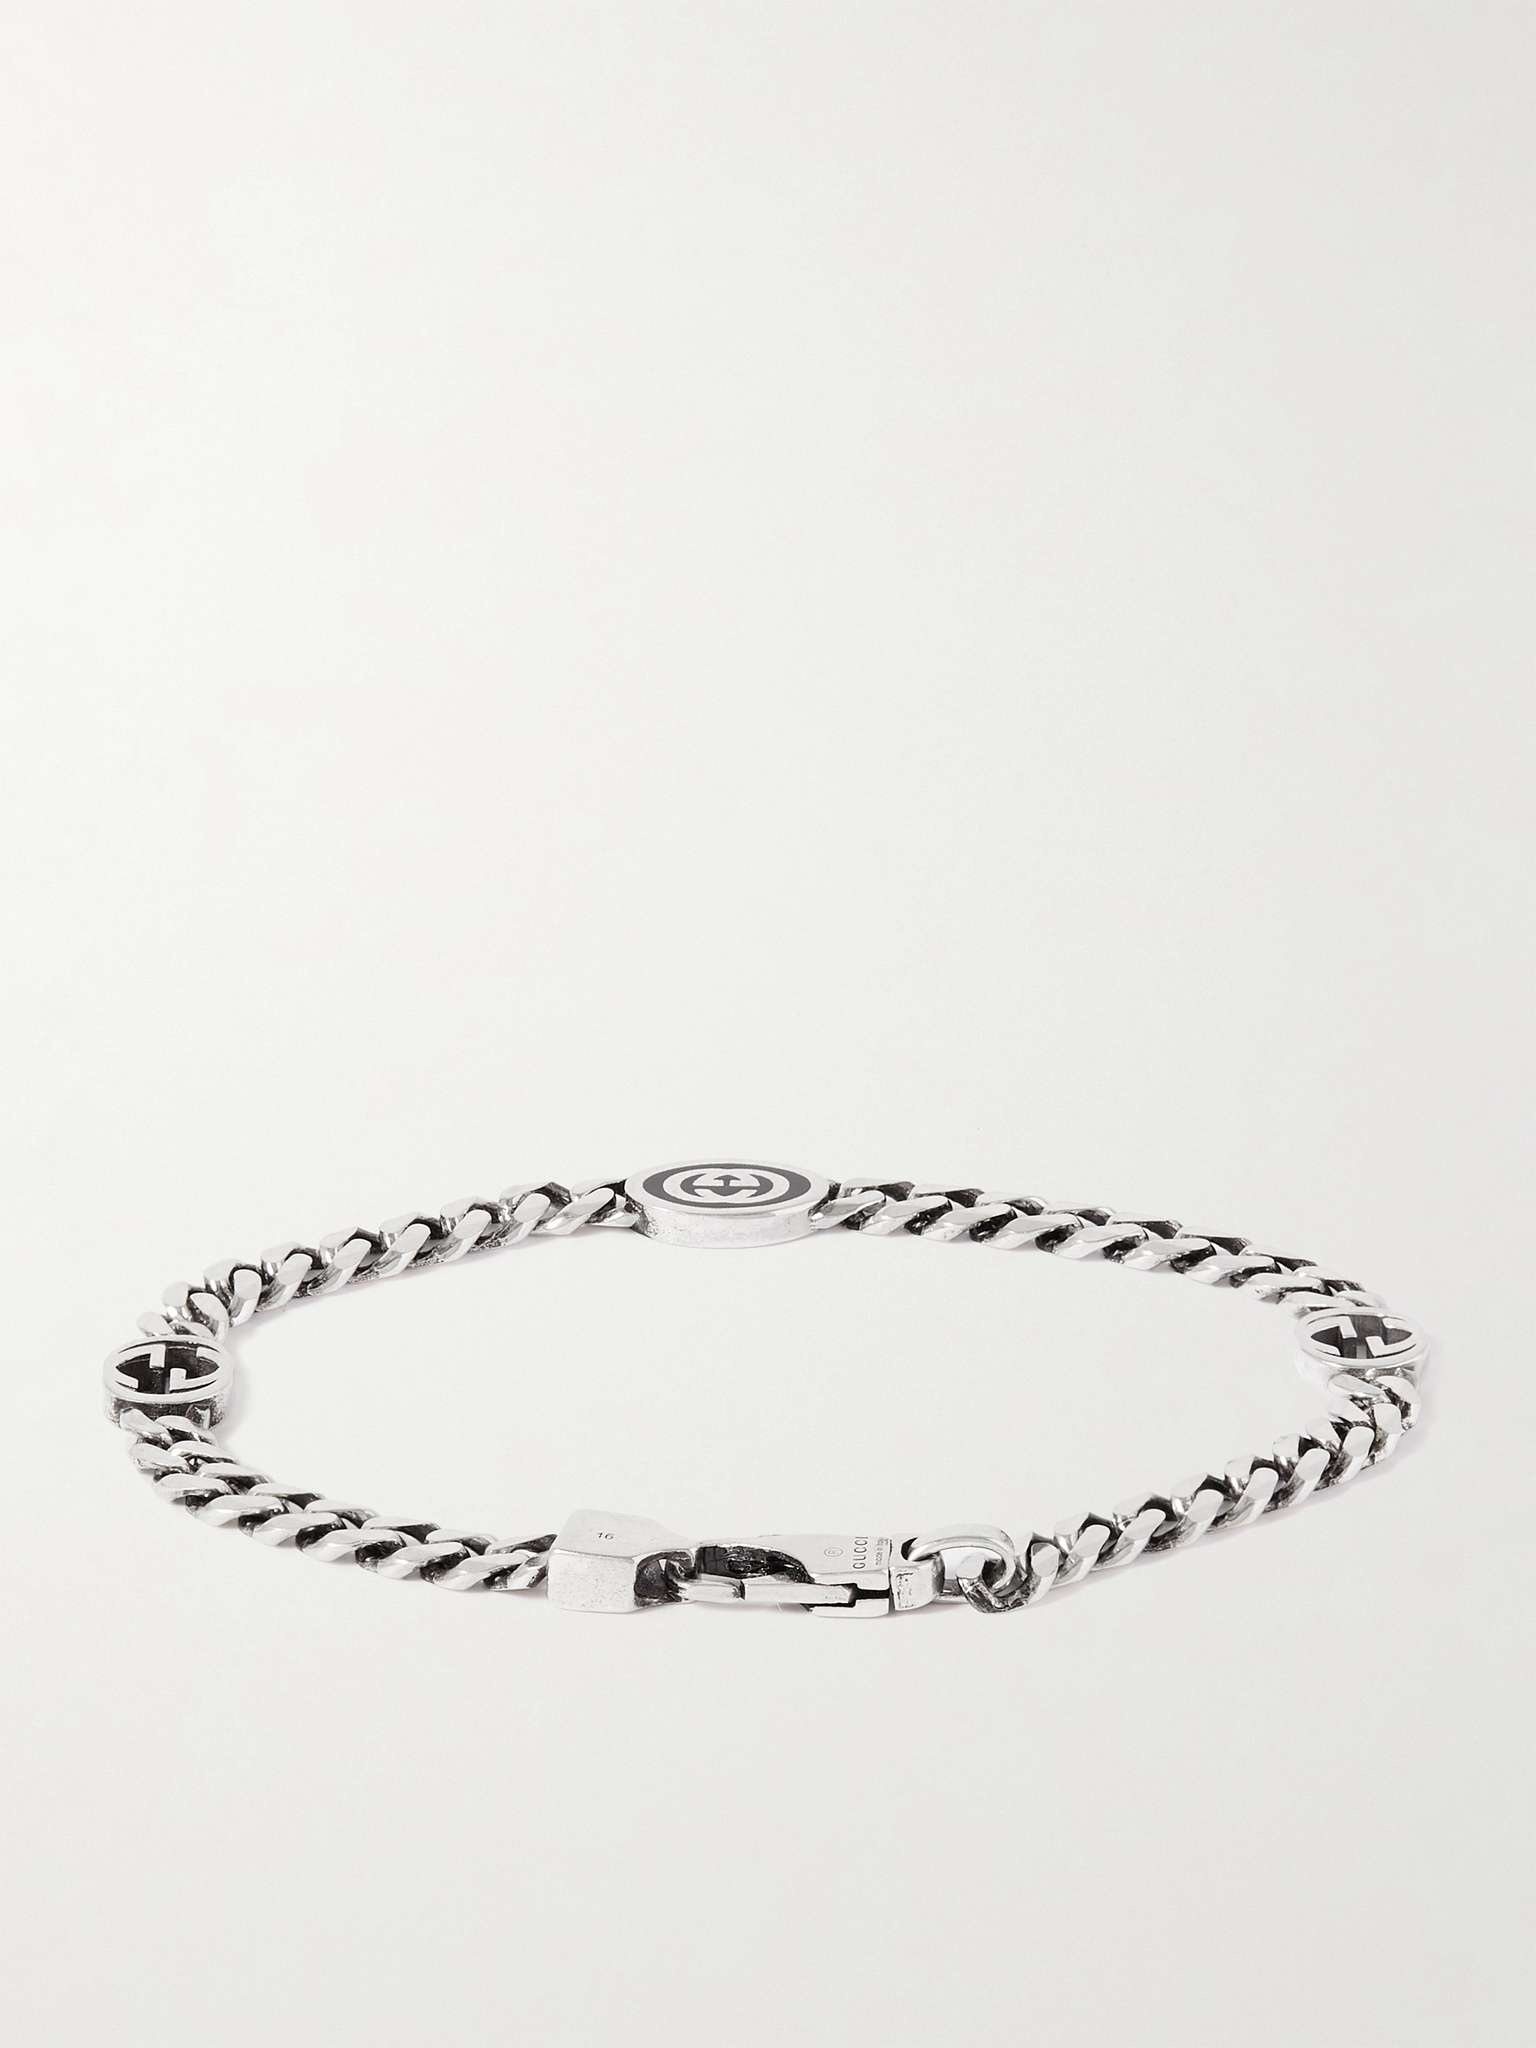 Sterling Silver and Enamel Chain Bracelet - 3